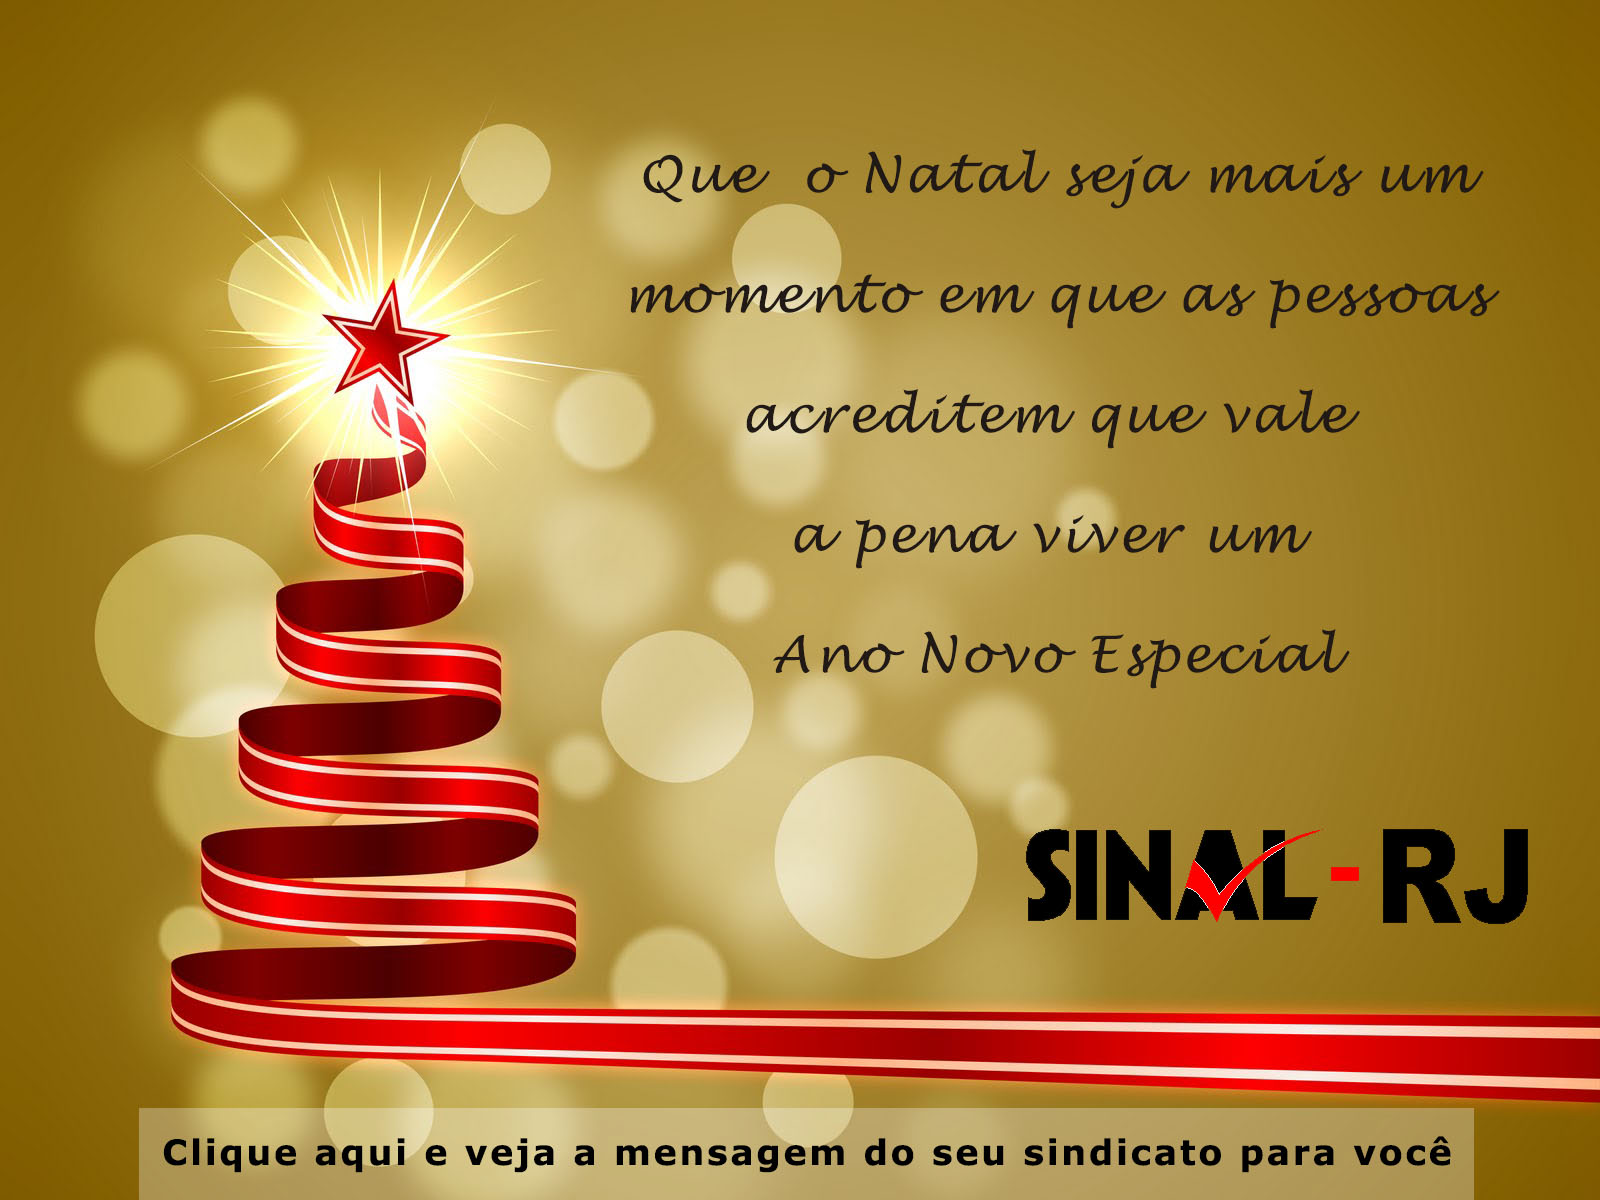 Feliz Natal e próspero 2014! | SINAL - Sindicato Nacional dos Funcionários  do Banco Central